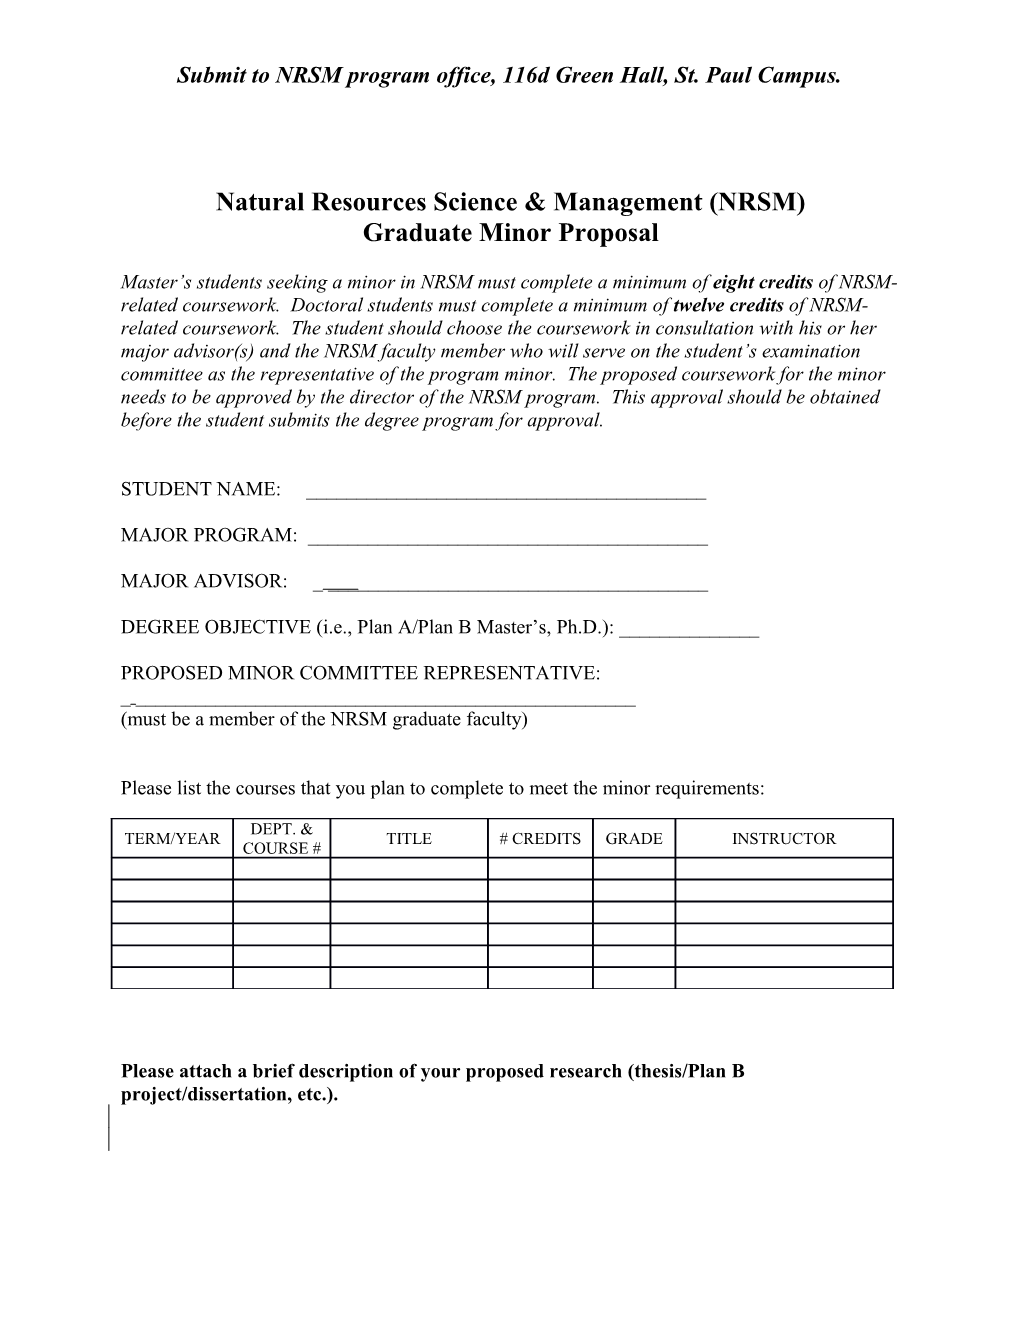 Natural Resources Science & Management (NRSM)